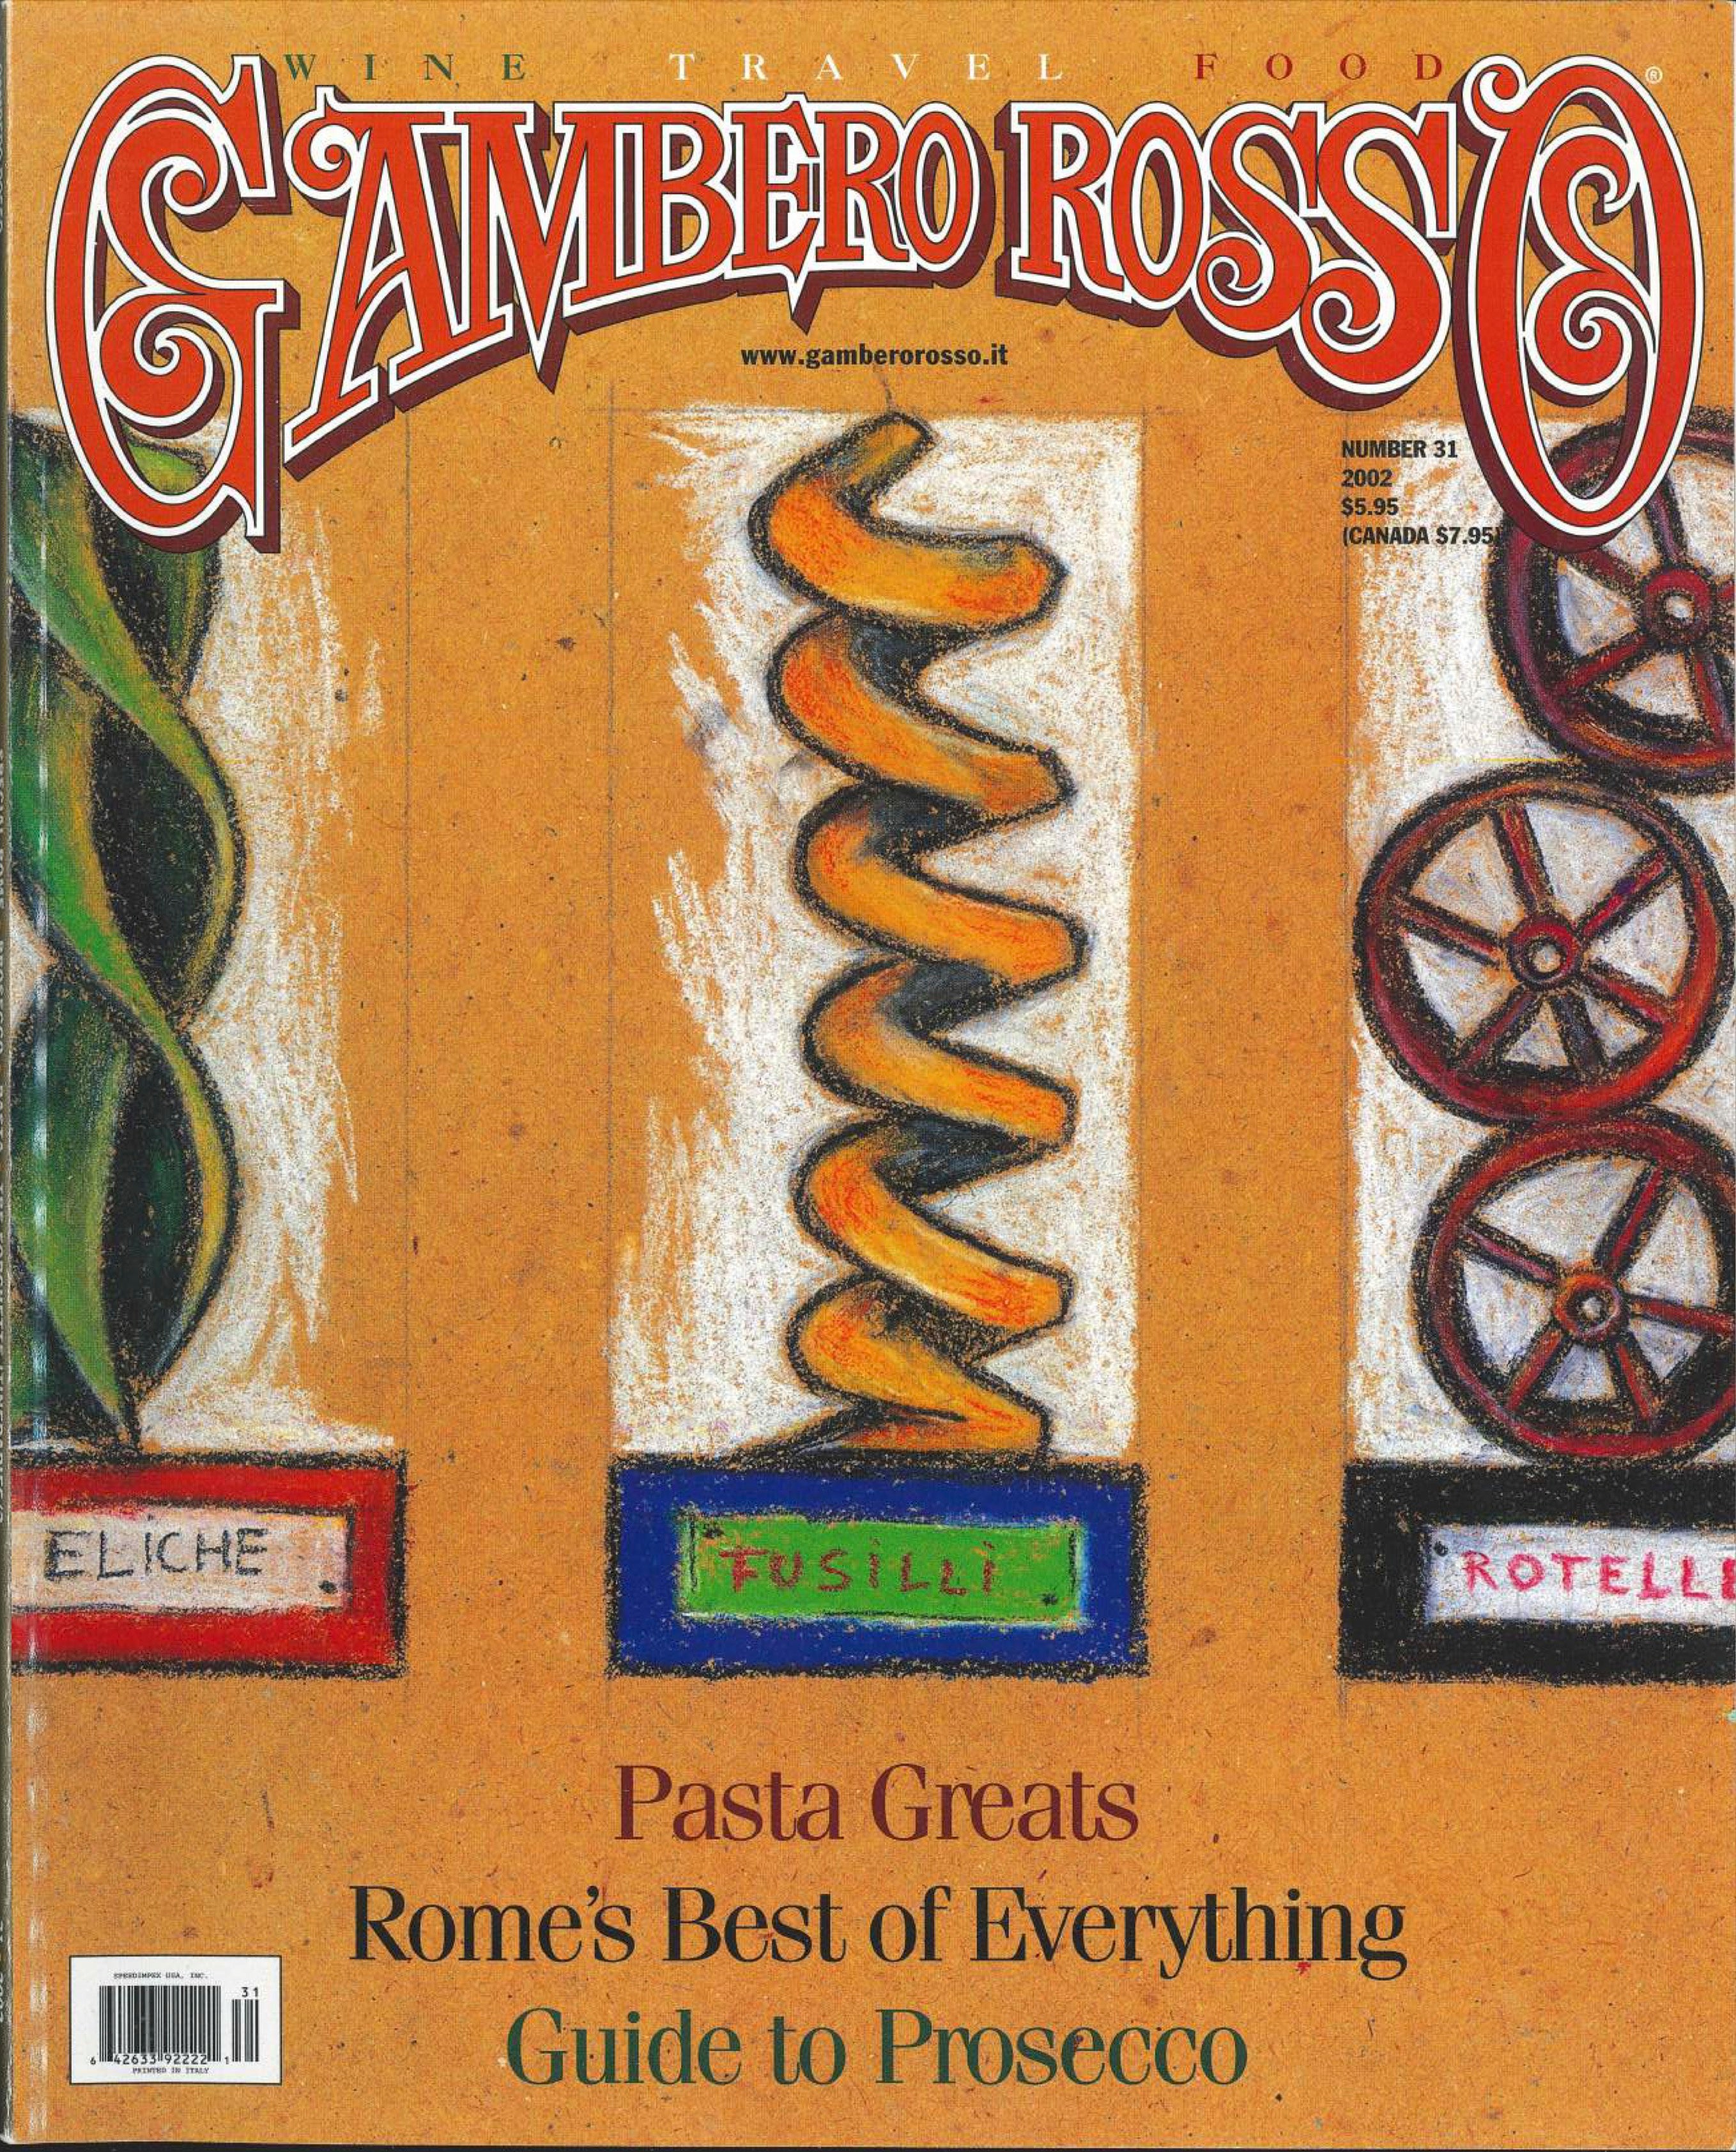 The gastronomic magazine Gambero Rosso pays tribute to Fabbri pasta